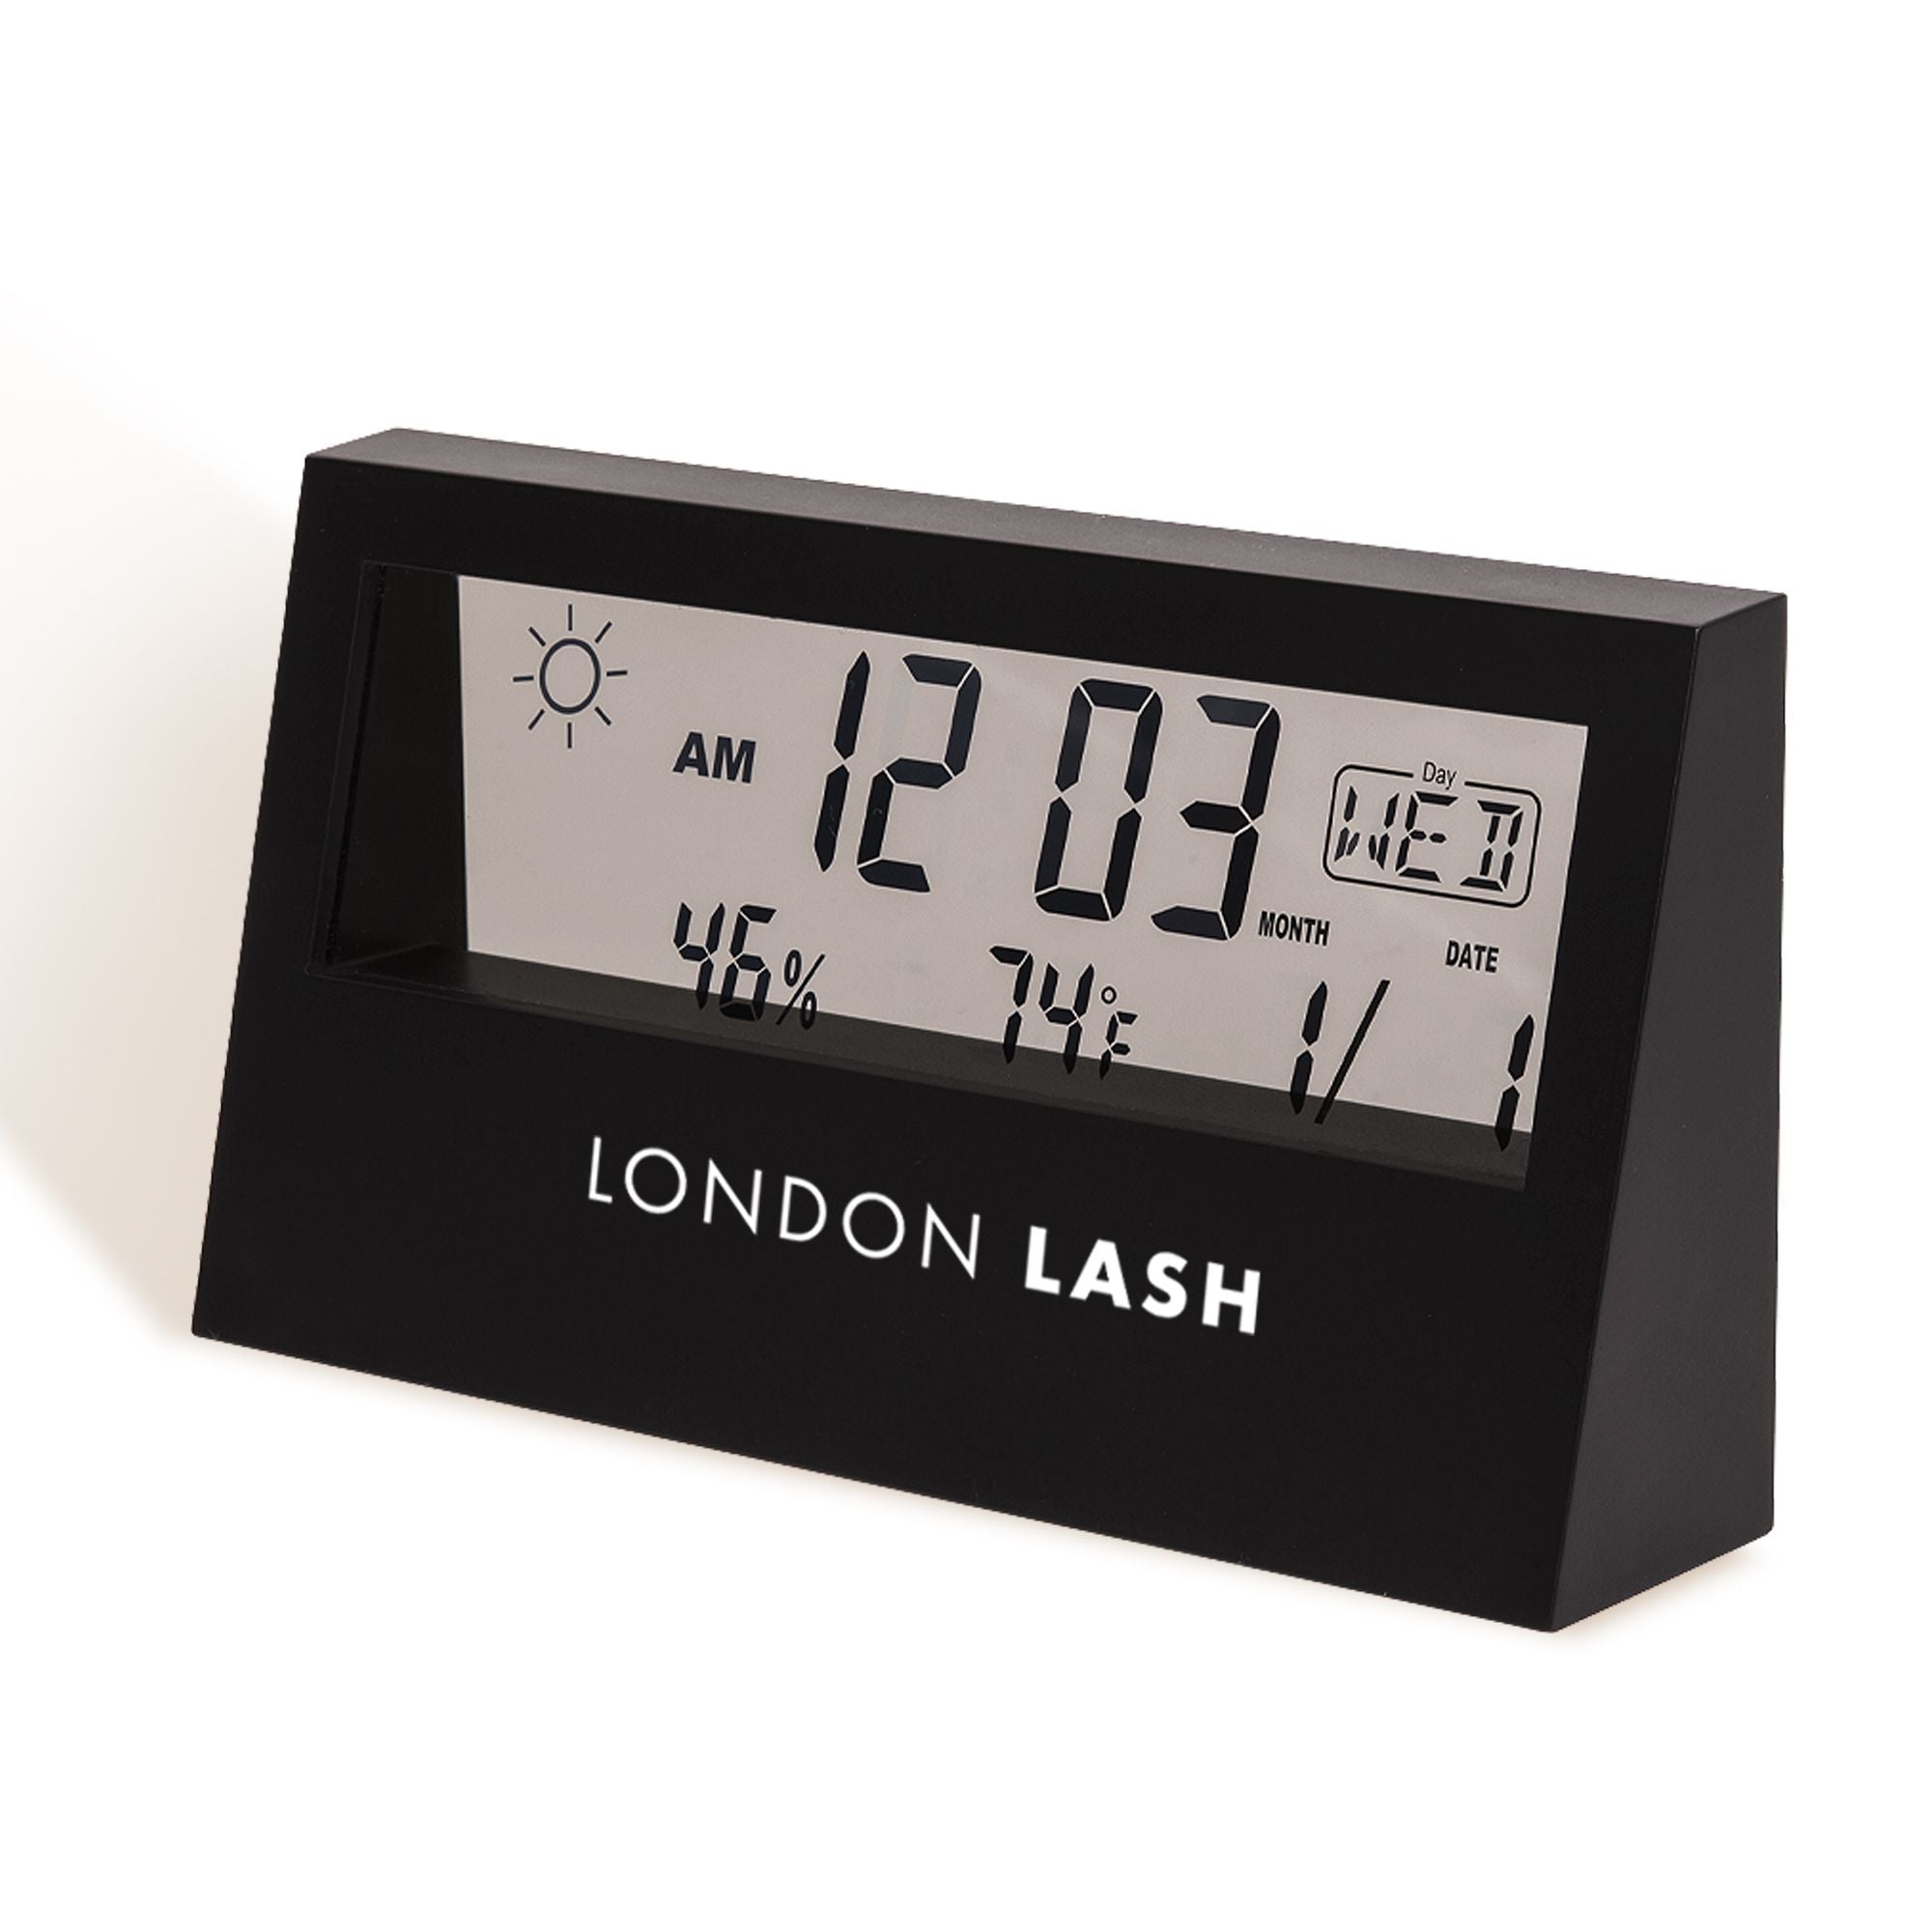 London Lash Digital Hygrometer for Lash Technician Beauty Salons